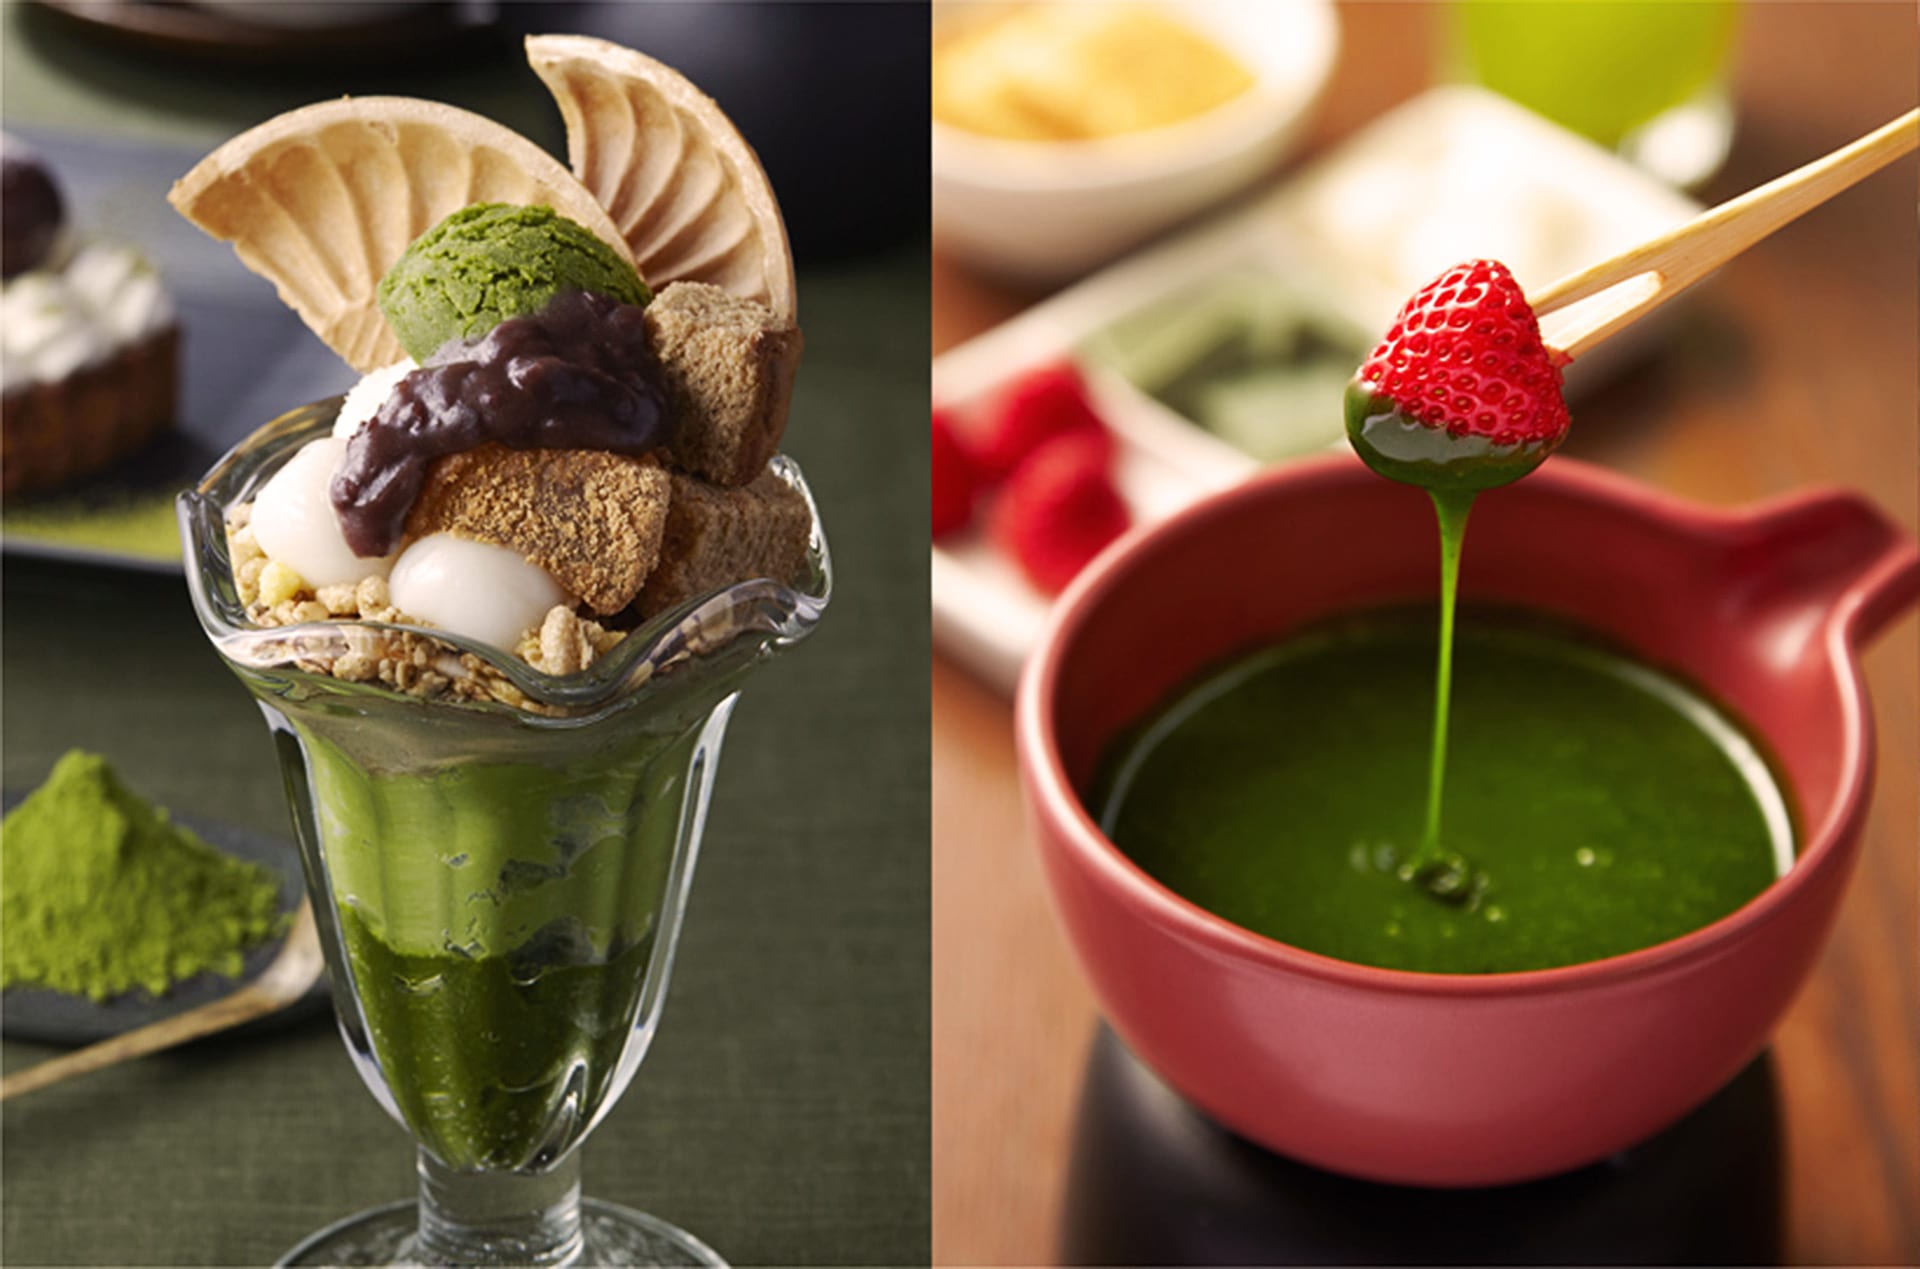 Dig Into Matcha Fondue At This Famous Tokyo Green Tea Dessert Café, Opening At VivoCity